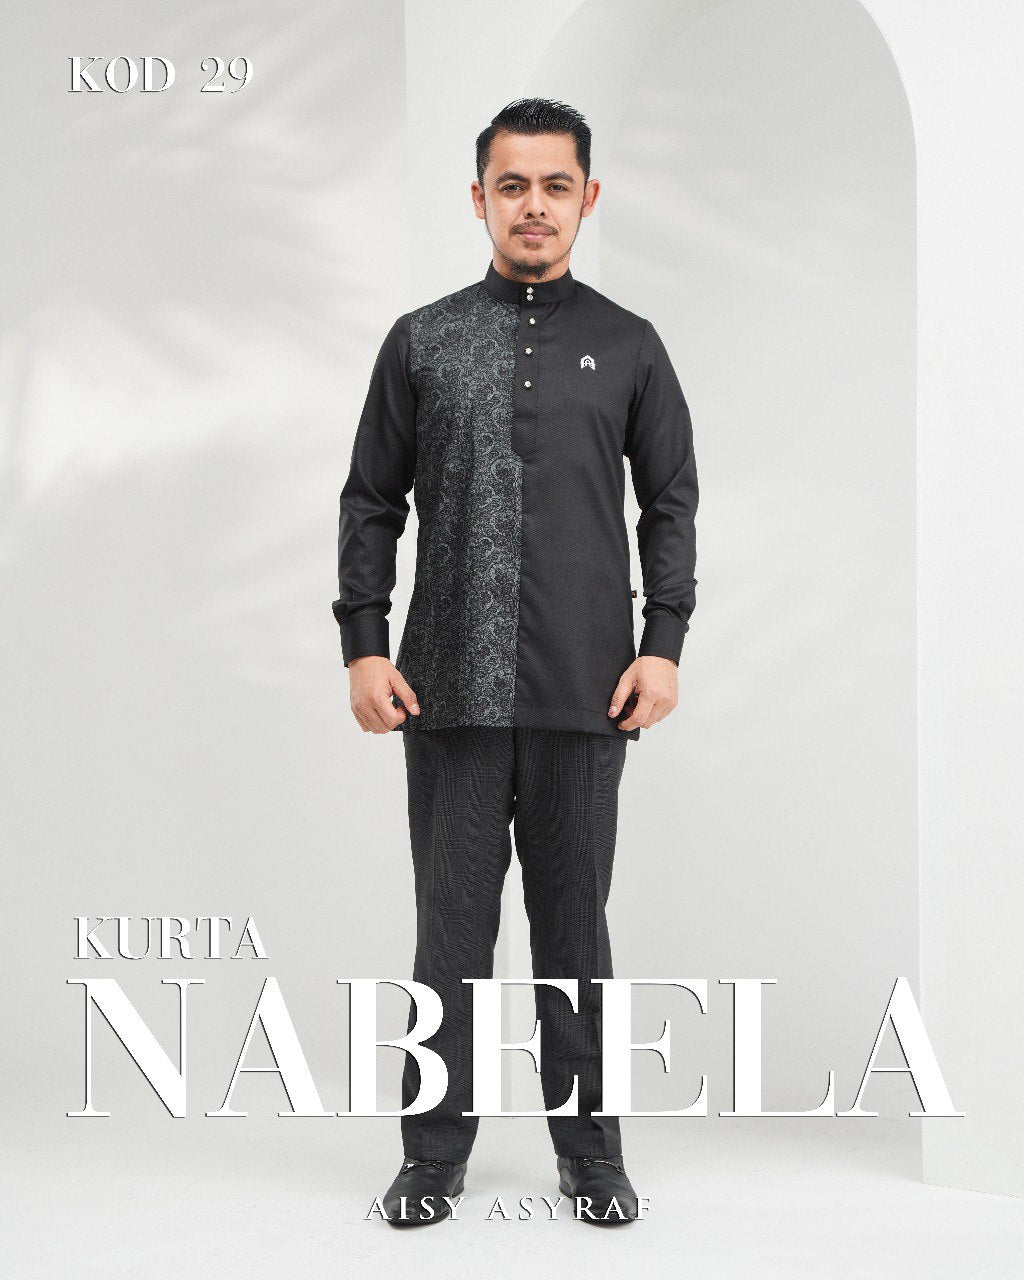 Kurta Nabeela - Kod 29  (Black Grey Abstract) - NEW RELEASE